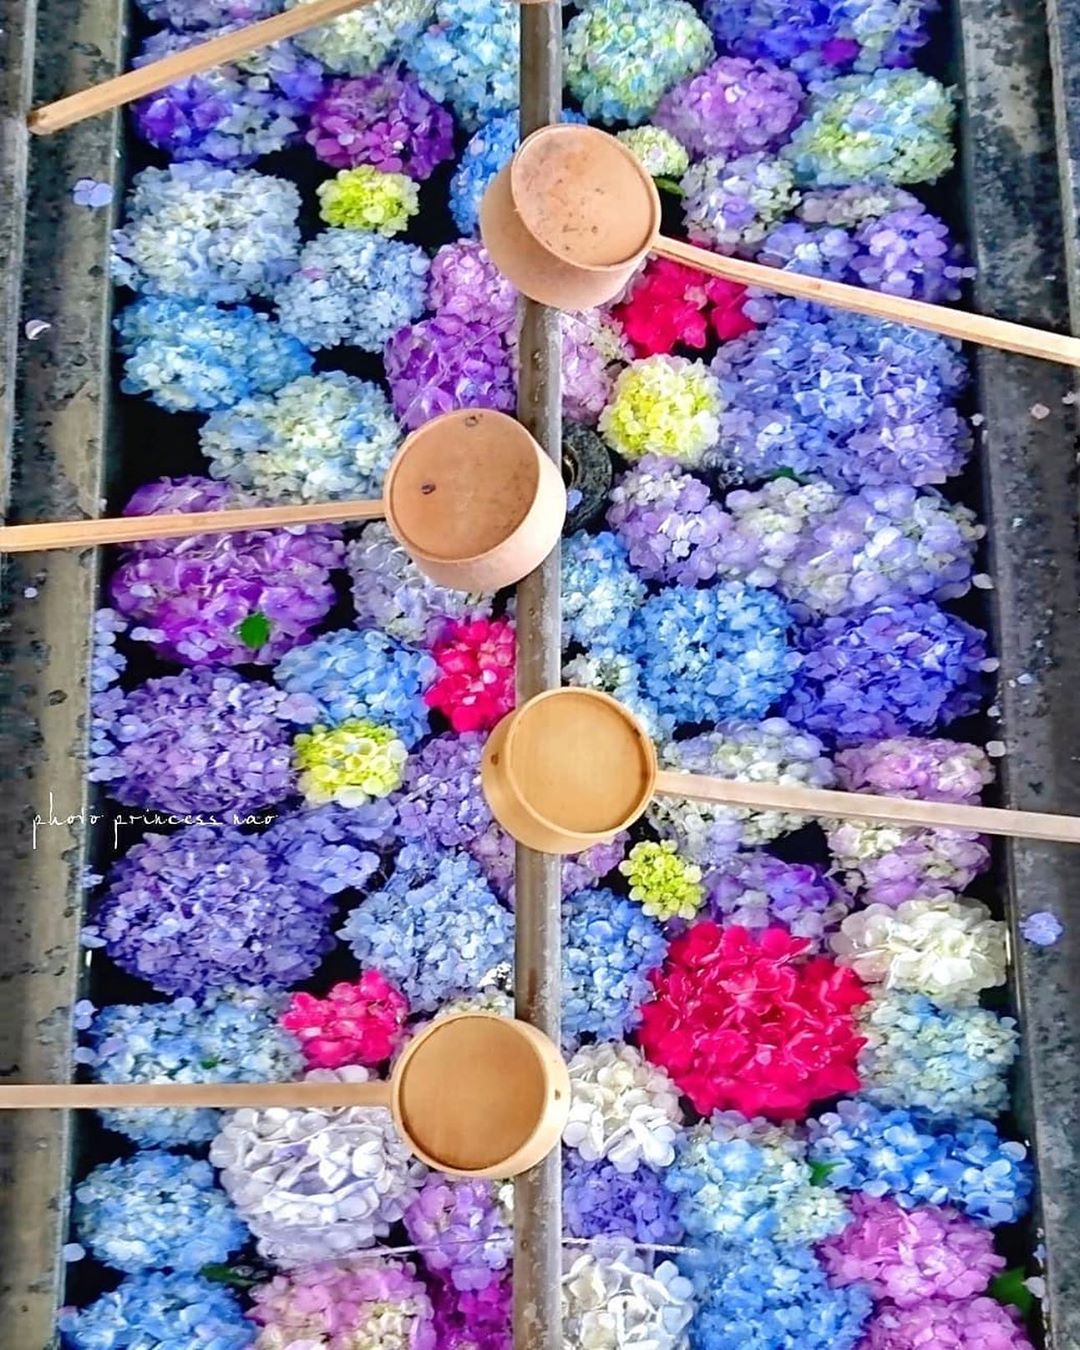 Retrip Nippon Retrip 福岡 こちらは 福岡県春日市にある 春日神社 の昨年の様子です 色鮮やかな紫陽花が浮かぶ花手水がとっても美しいですよね Retripでは Wacoca Japan People Life Style